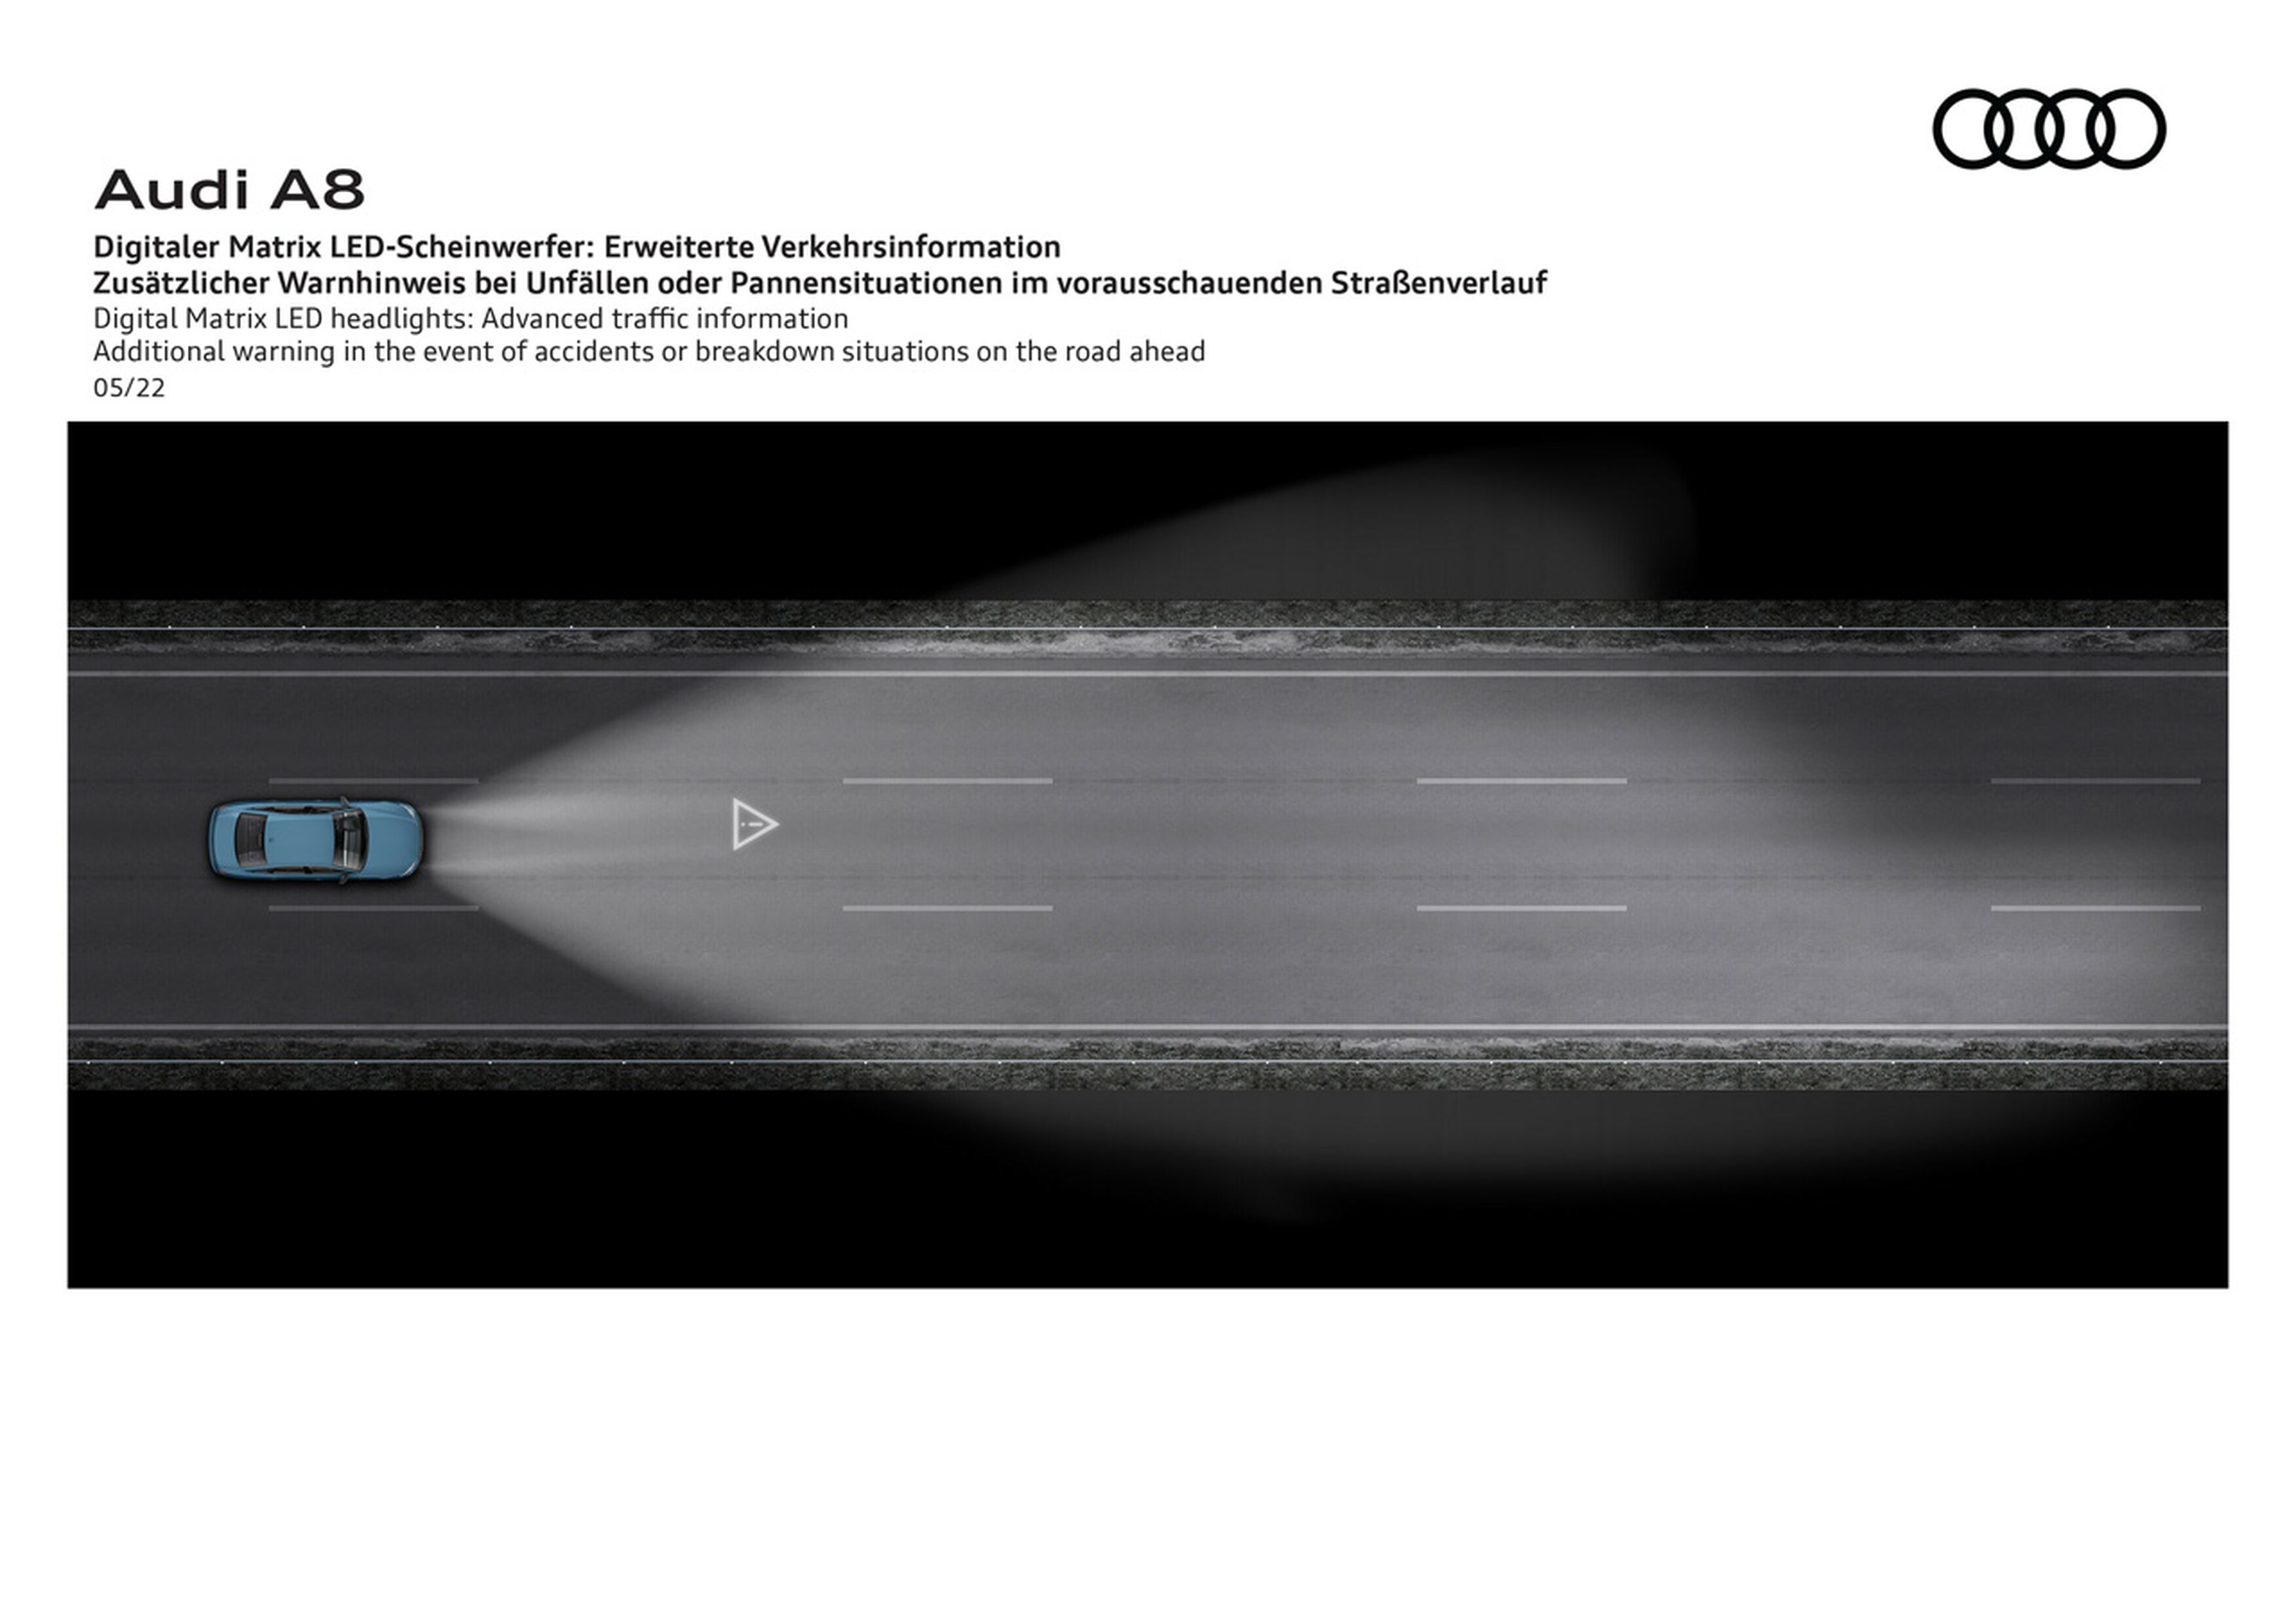 Audi A8 nueva tecnología luces